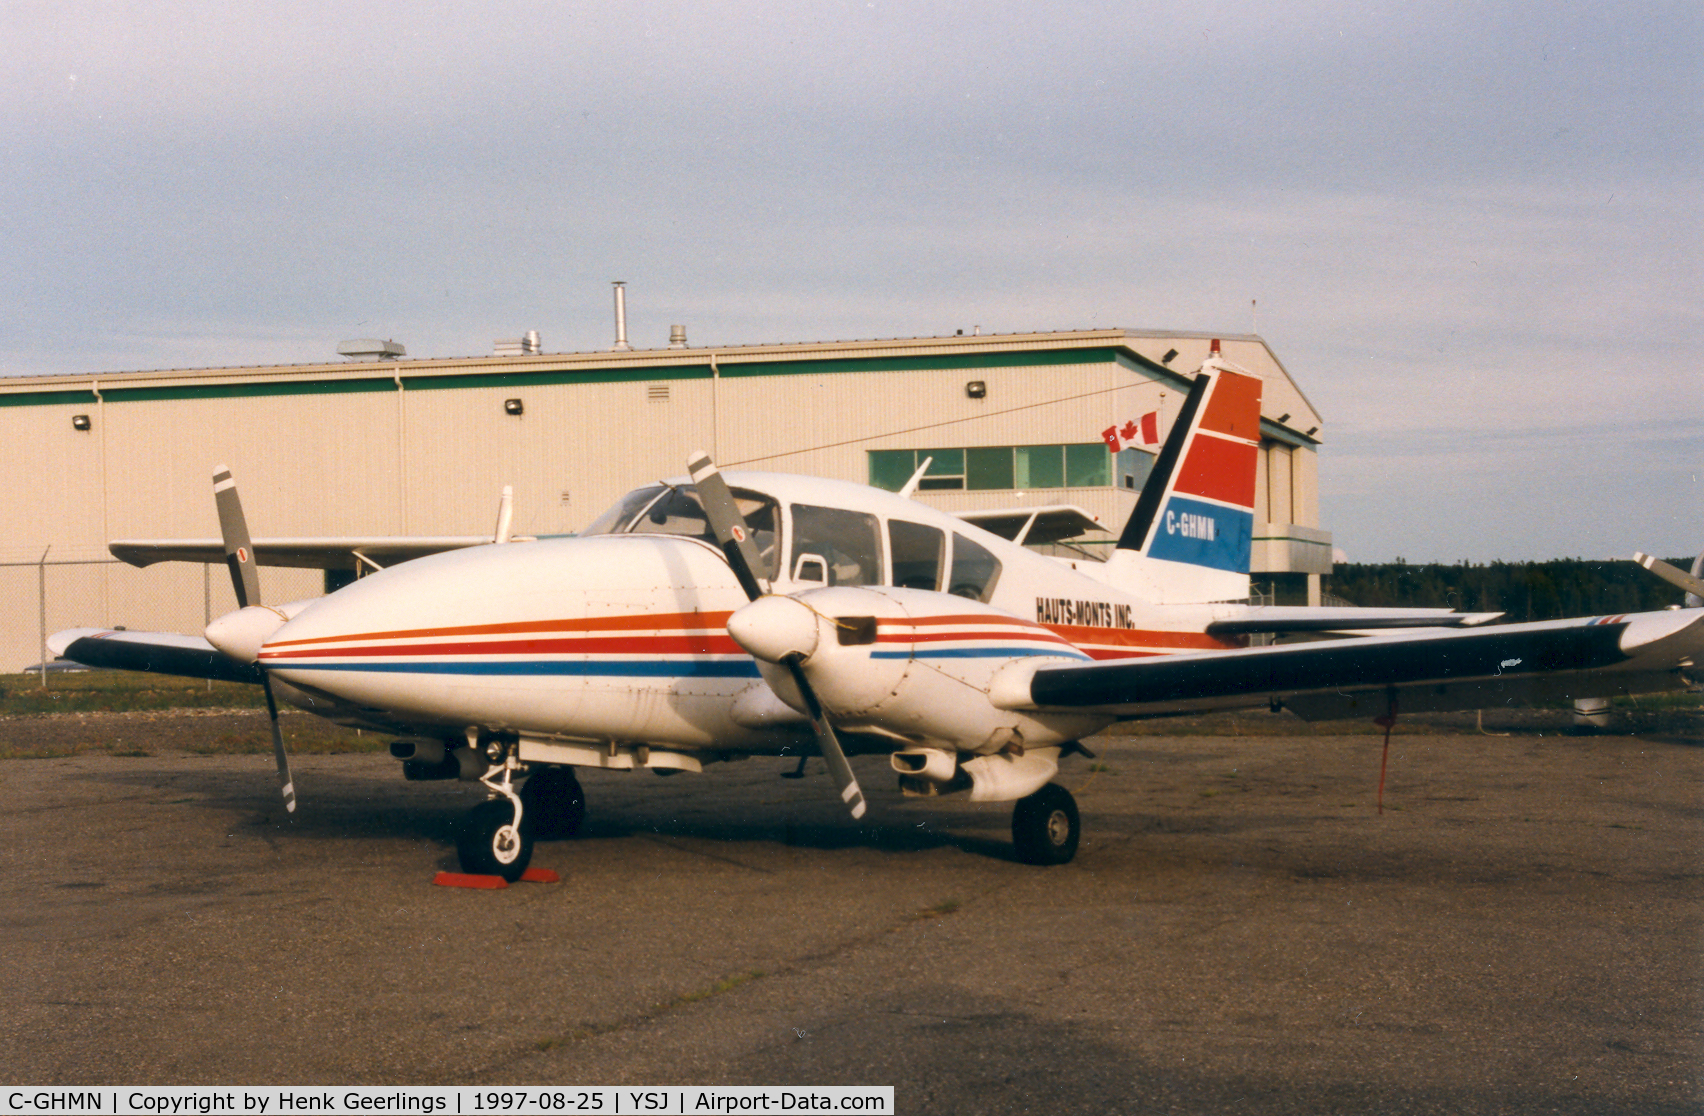 C-GHMN, 1968 Piper PA-23-250 C/N 27-3893, Hauts- Monts Inc